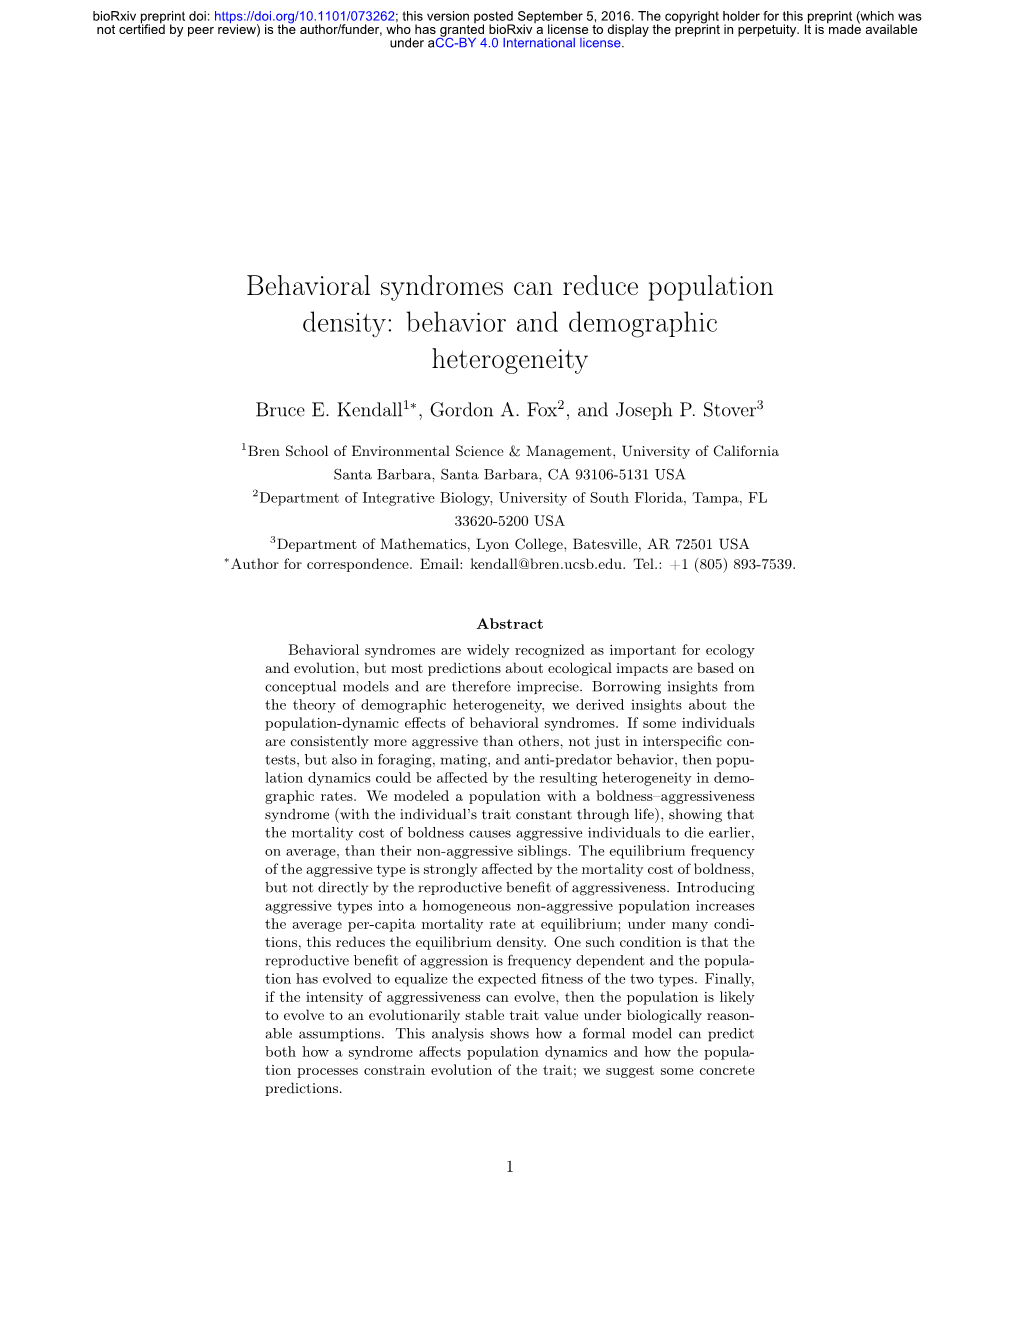 Behavioral Syndromes Can Reduce Population Density: Behavior and Demographic Heterogeneity